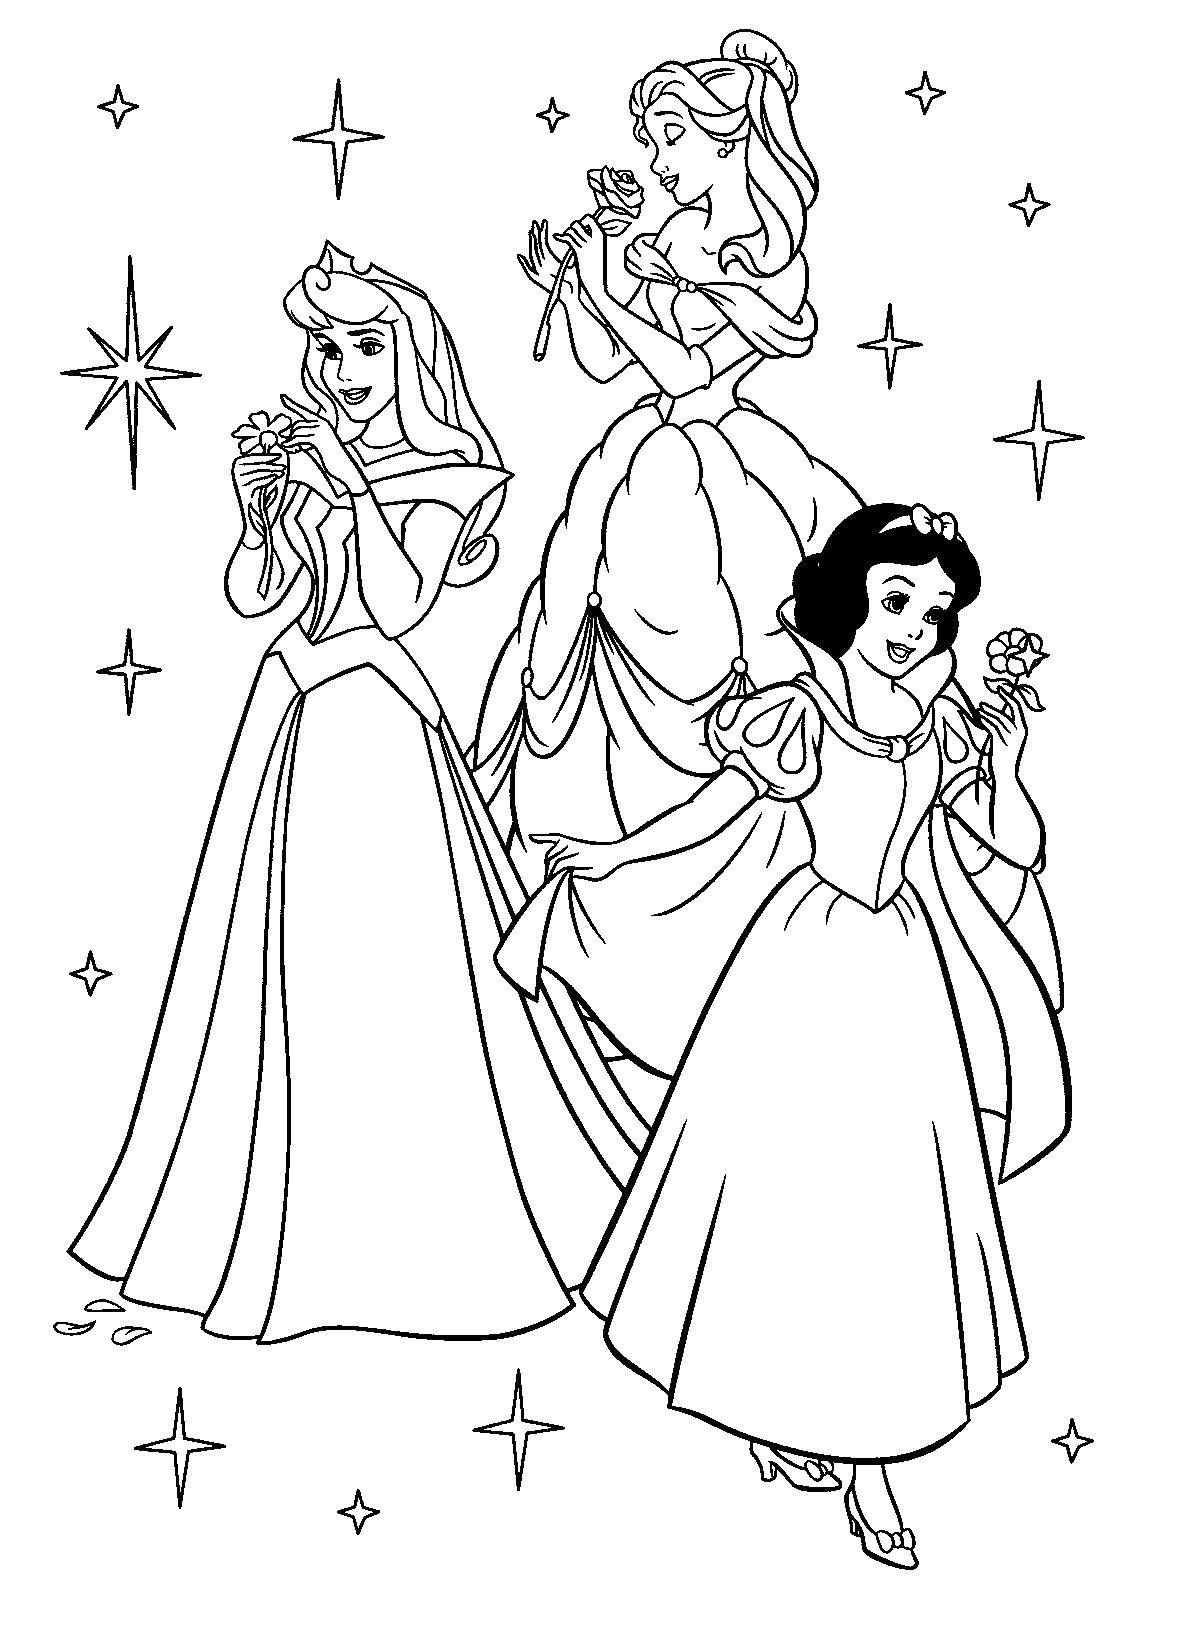 Название: Раскраска Три героини диснея. Категория: Диснеевские раскраски. Теги: принцессы, Белоснежка, цветы.